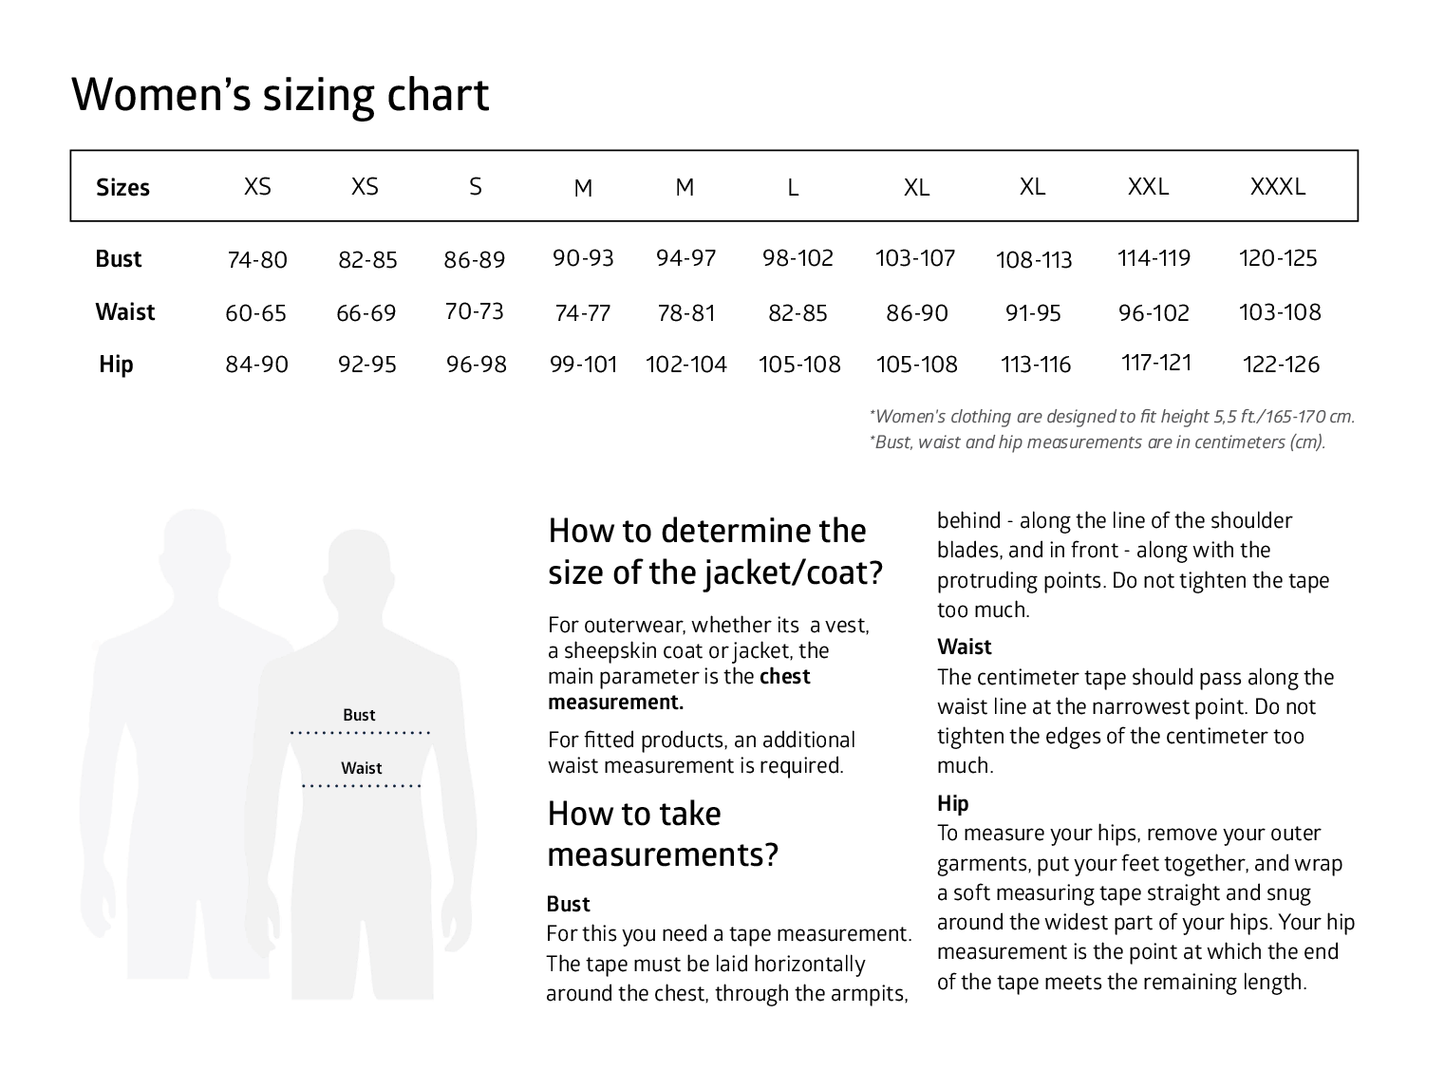 Women's size chart.